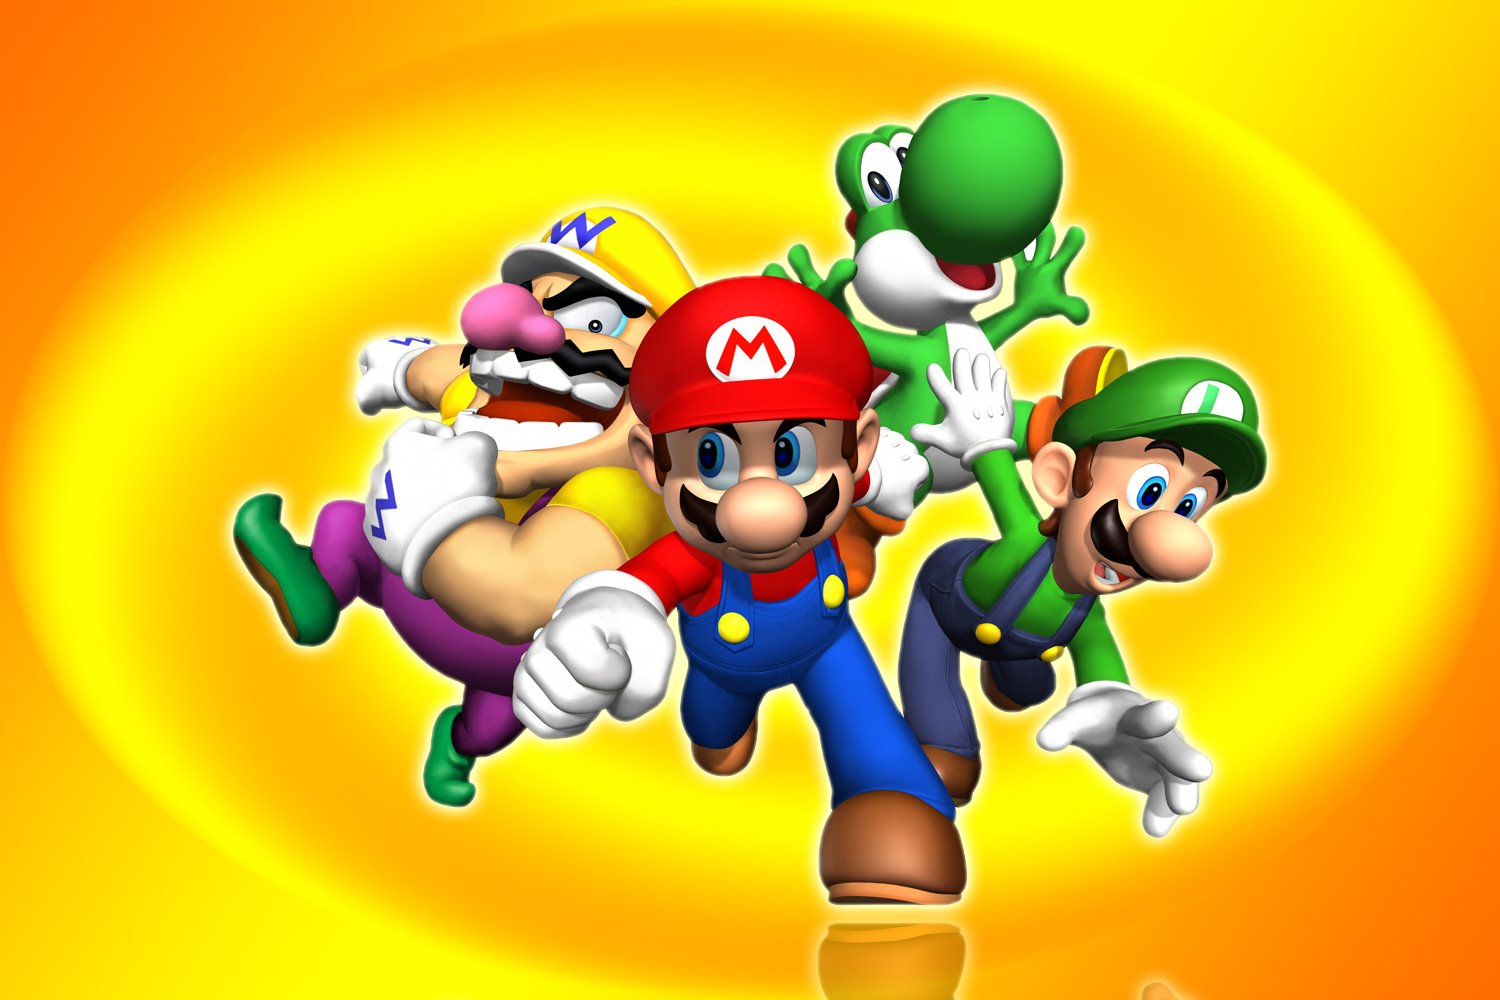 Супер марио версии. Супер Марио супермарио. Супер Марио герои игры. Марио (персонаж игр). Супер братья Марио игра.